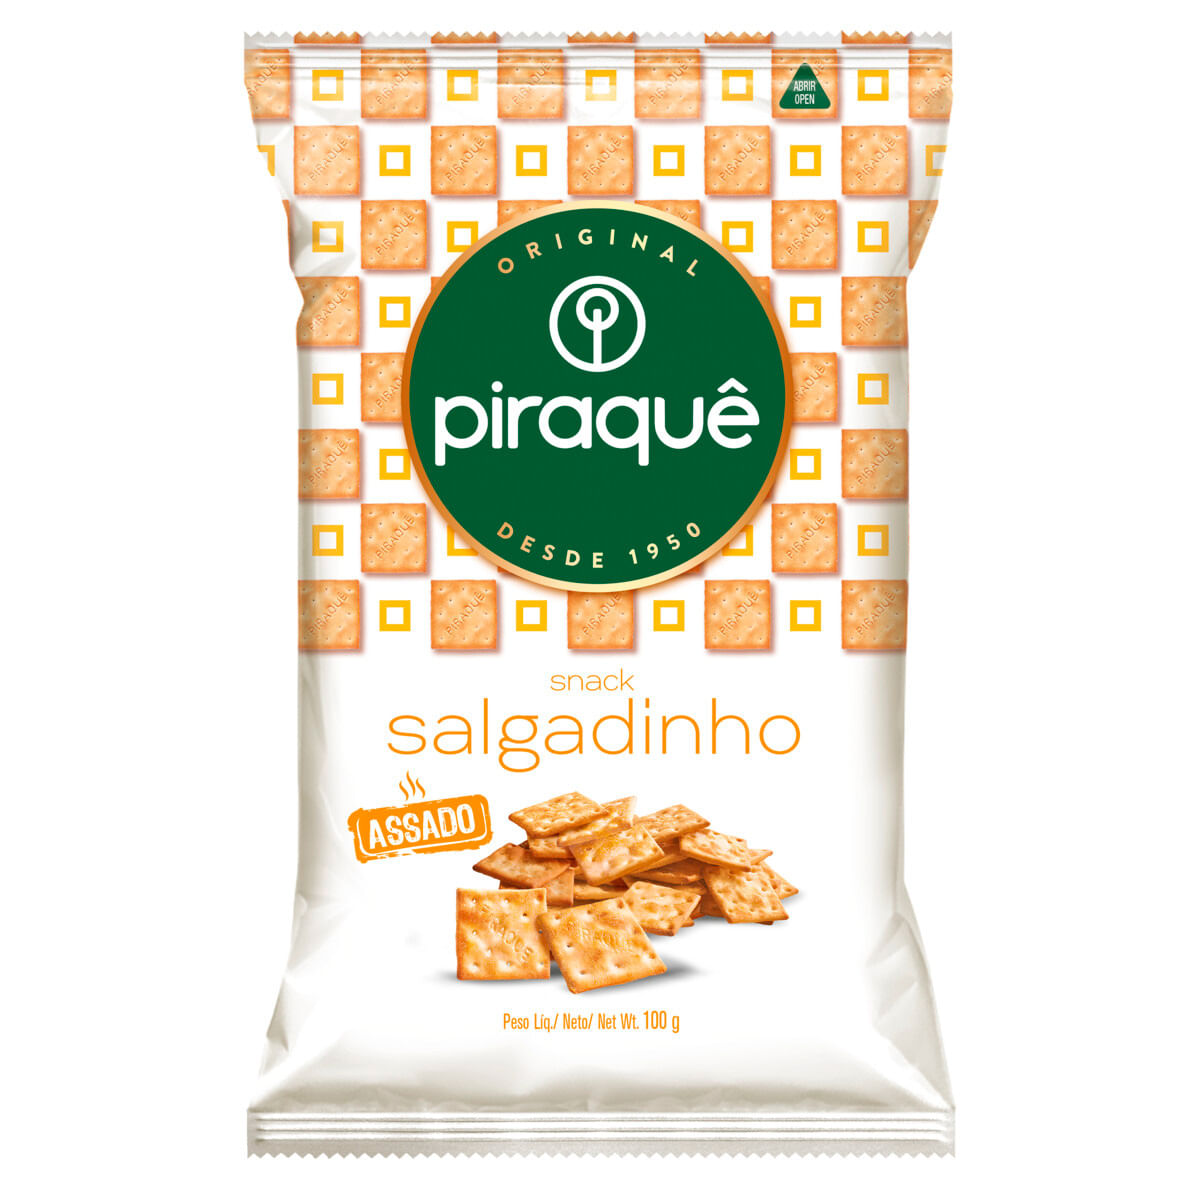 snack-salgadinho-piraque-100g-1.jpg